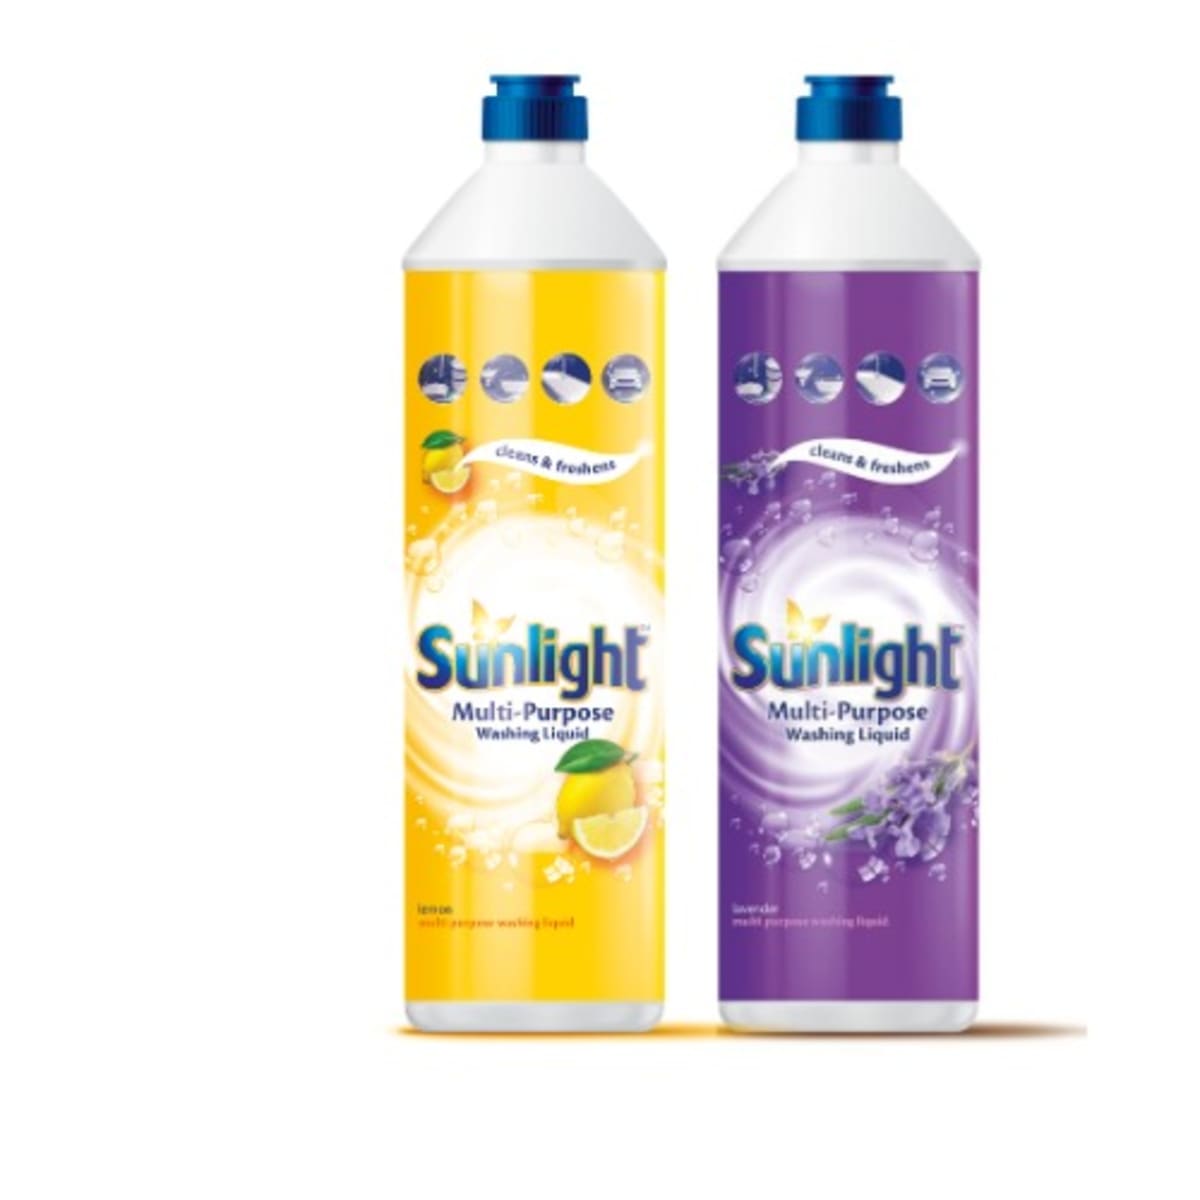 Sunlight Multi-purpose Washing Liquid Lavender + Lemon Twin Pack